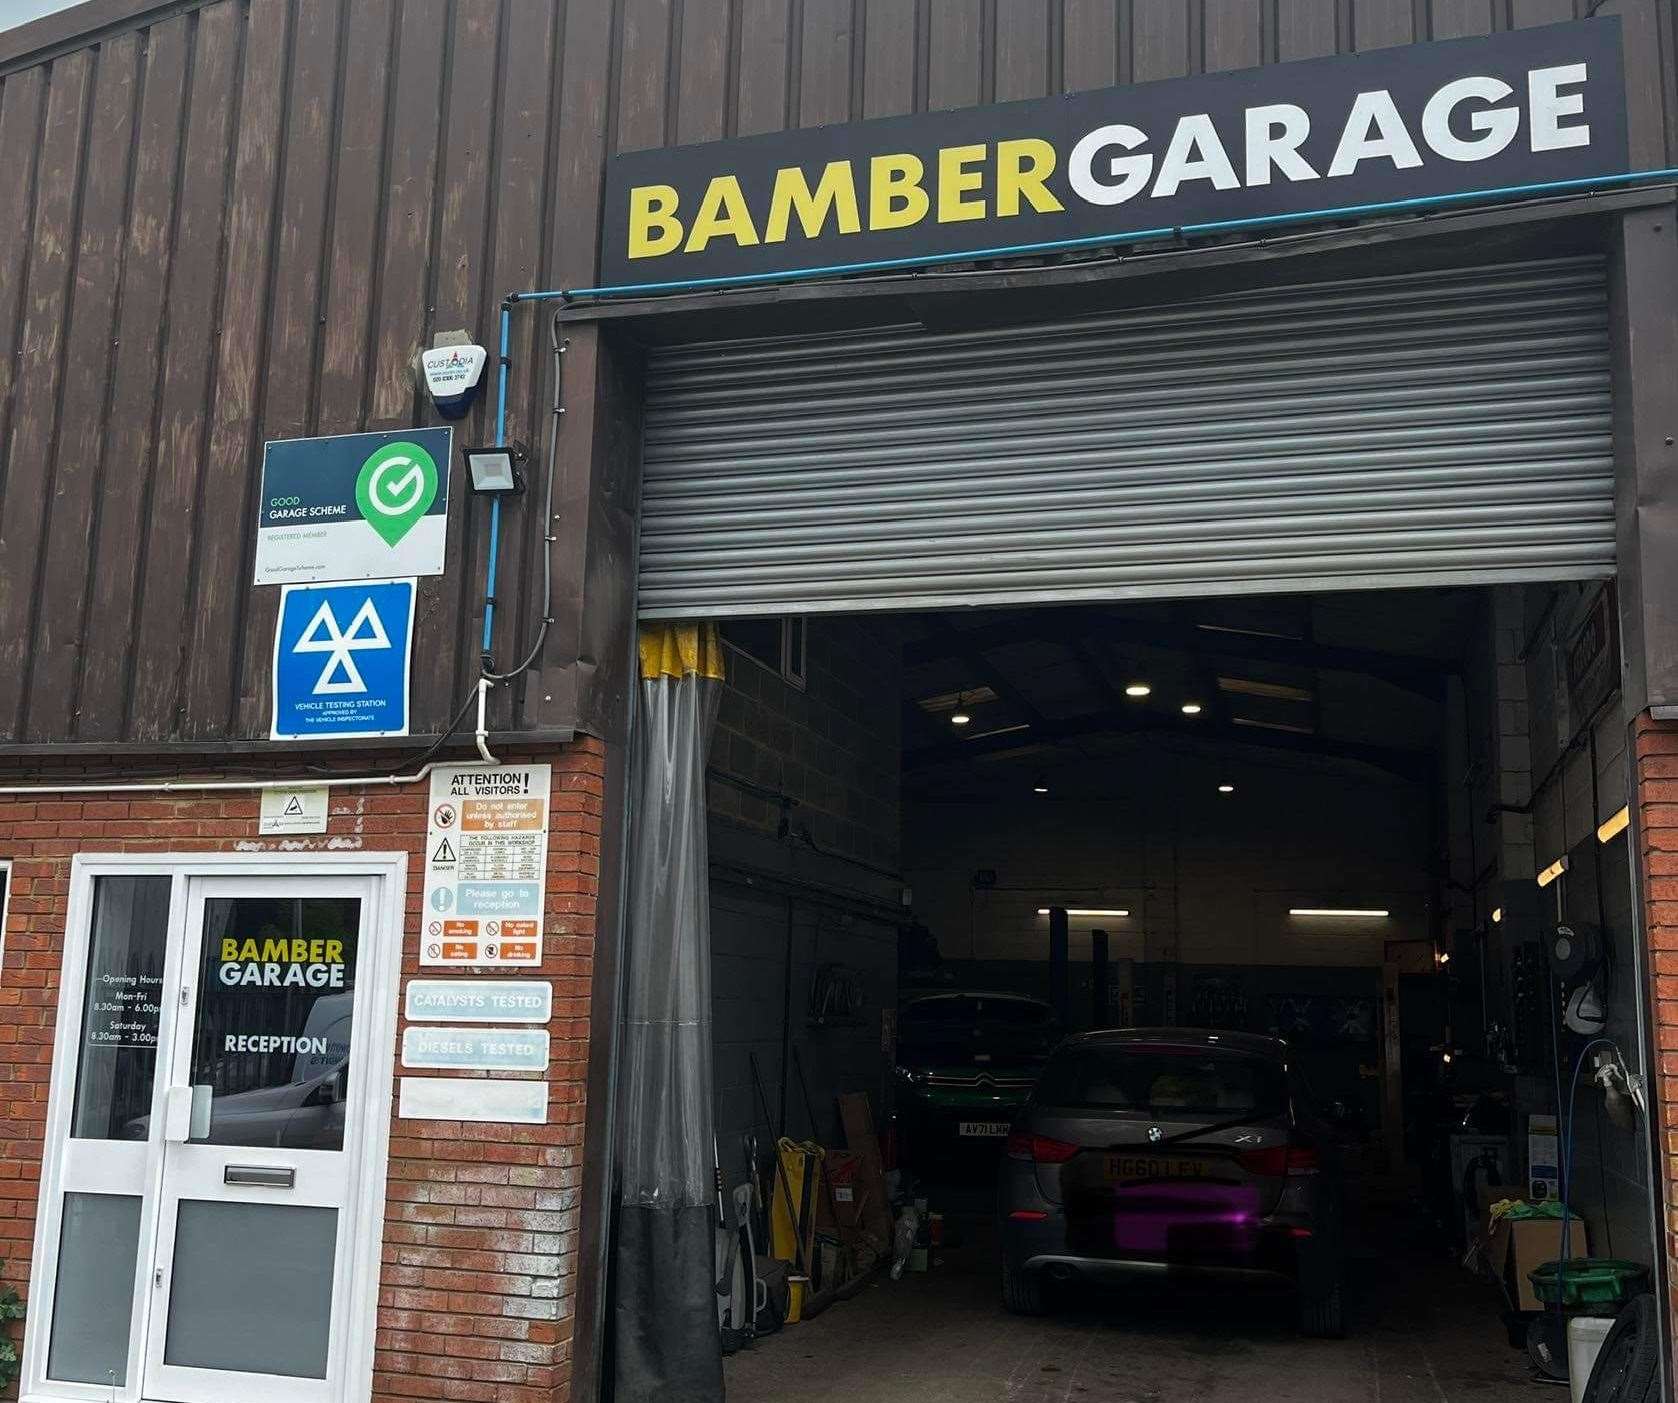 Bamber Garage in Ebbsfleet Industrial Estate is worried it is losing business